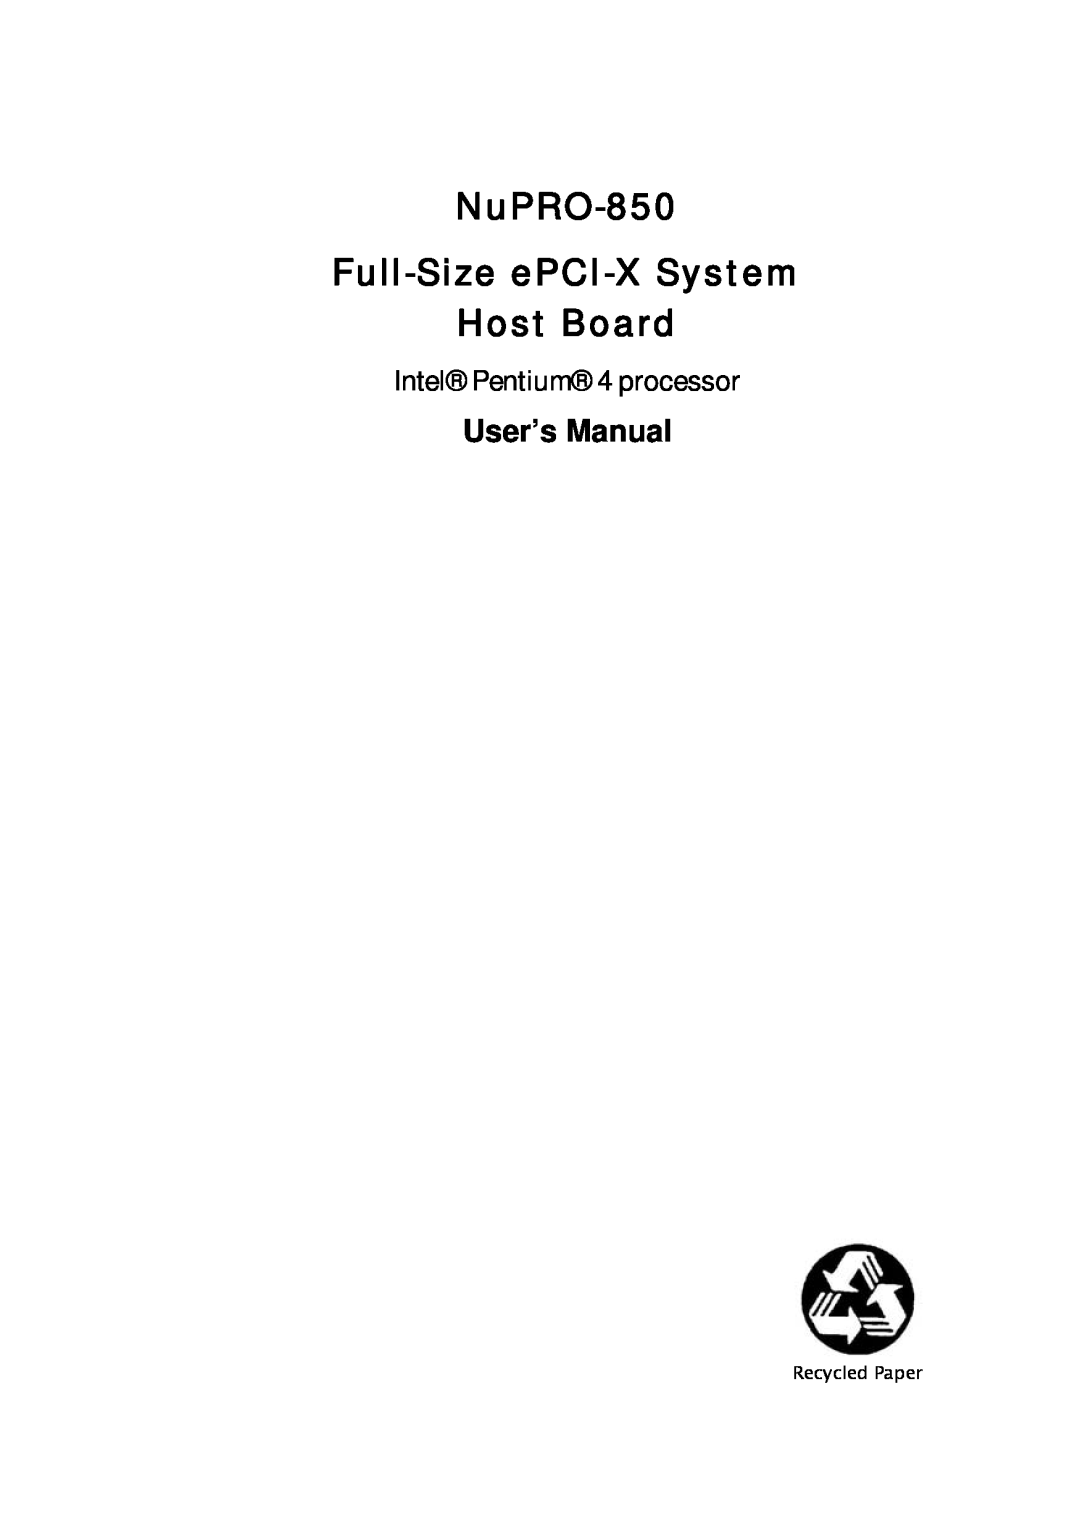 Intel user manual Intel Pentium 4 processor User’s Manual, NuPRO-850 Full-Size ePCI-X System Host Board, Recycled Paper 